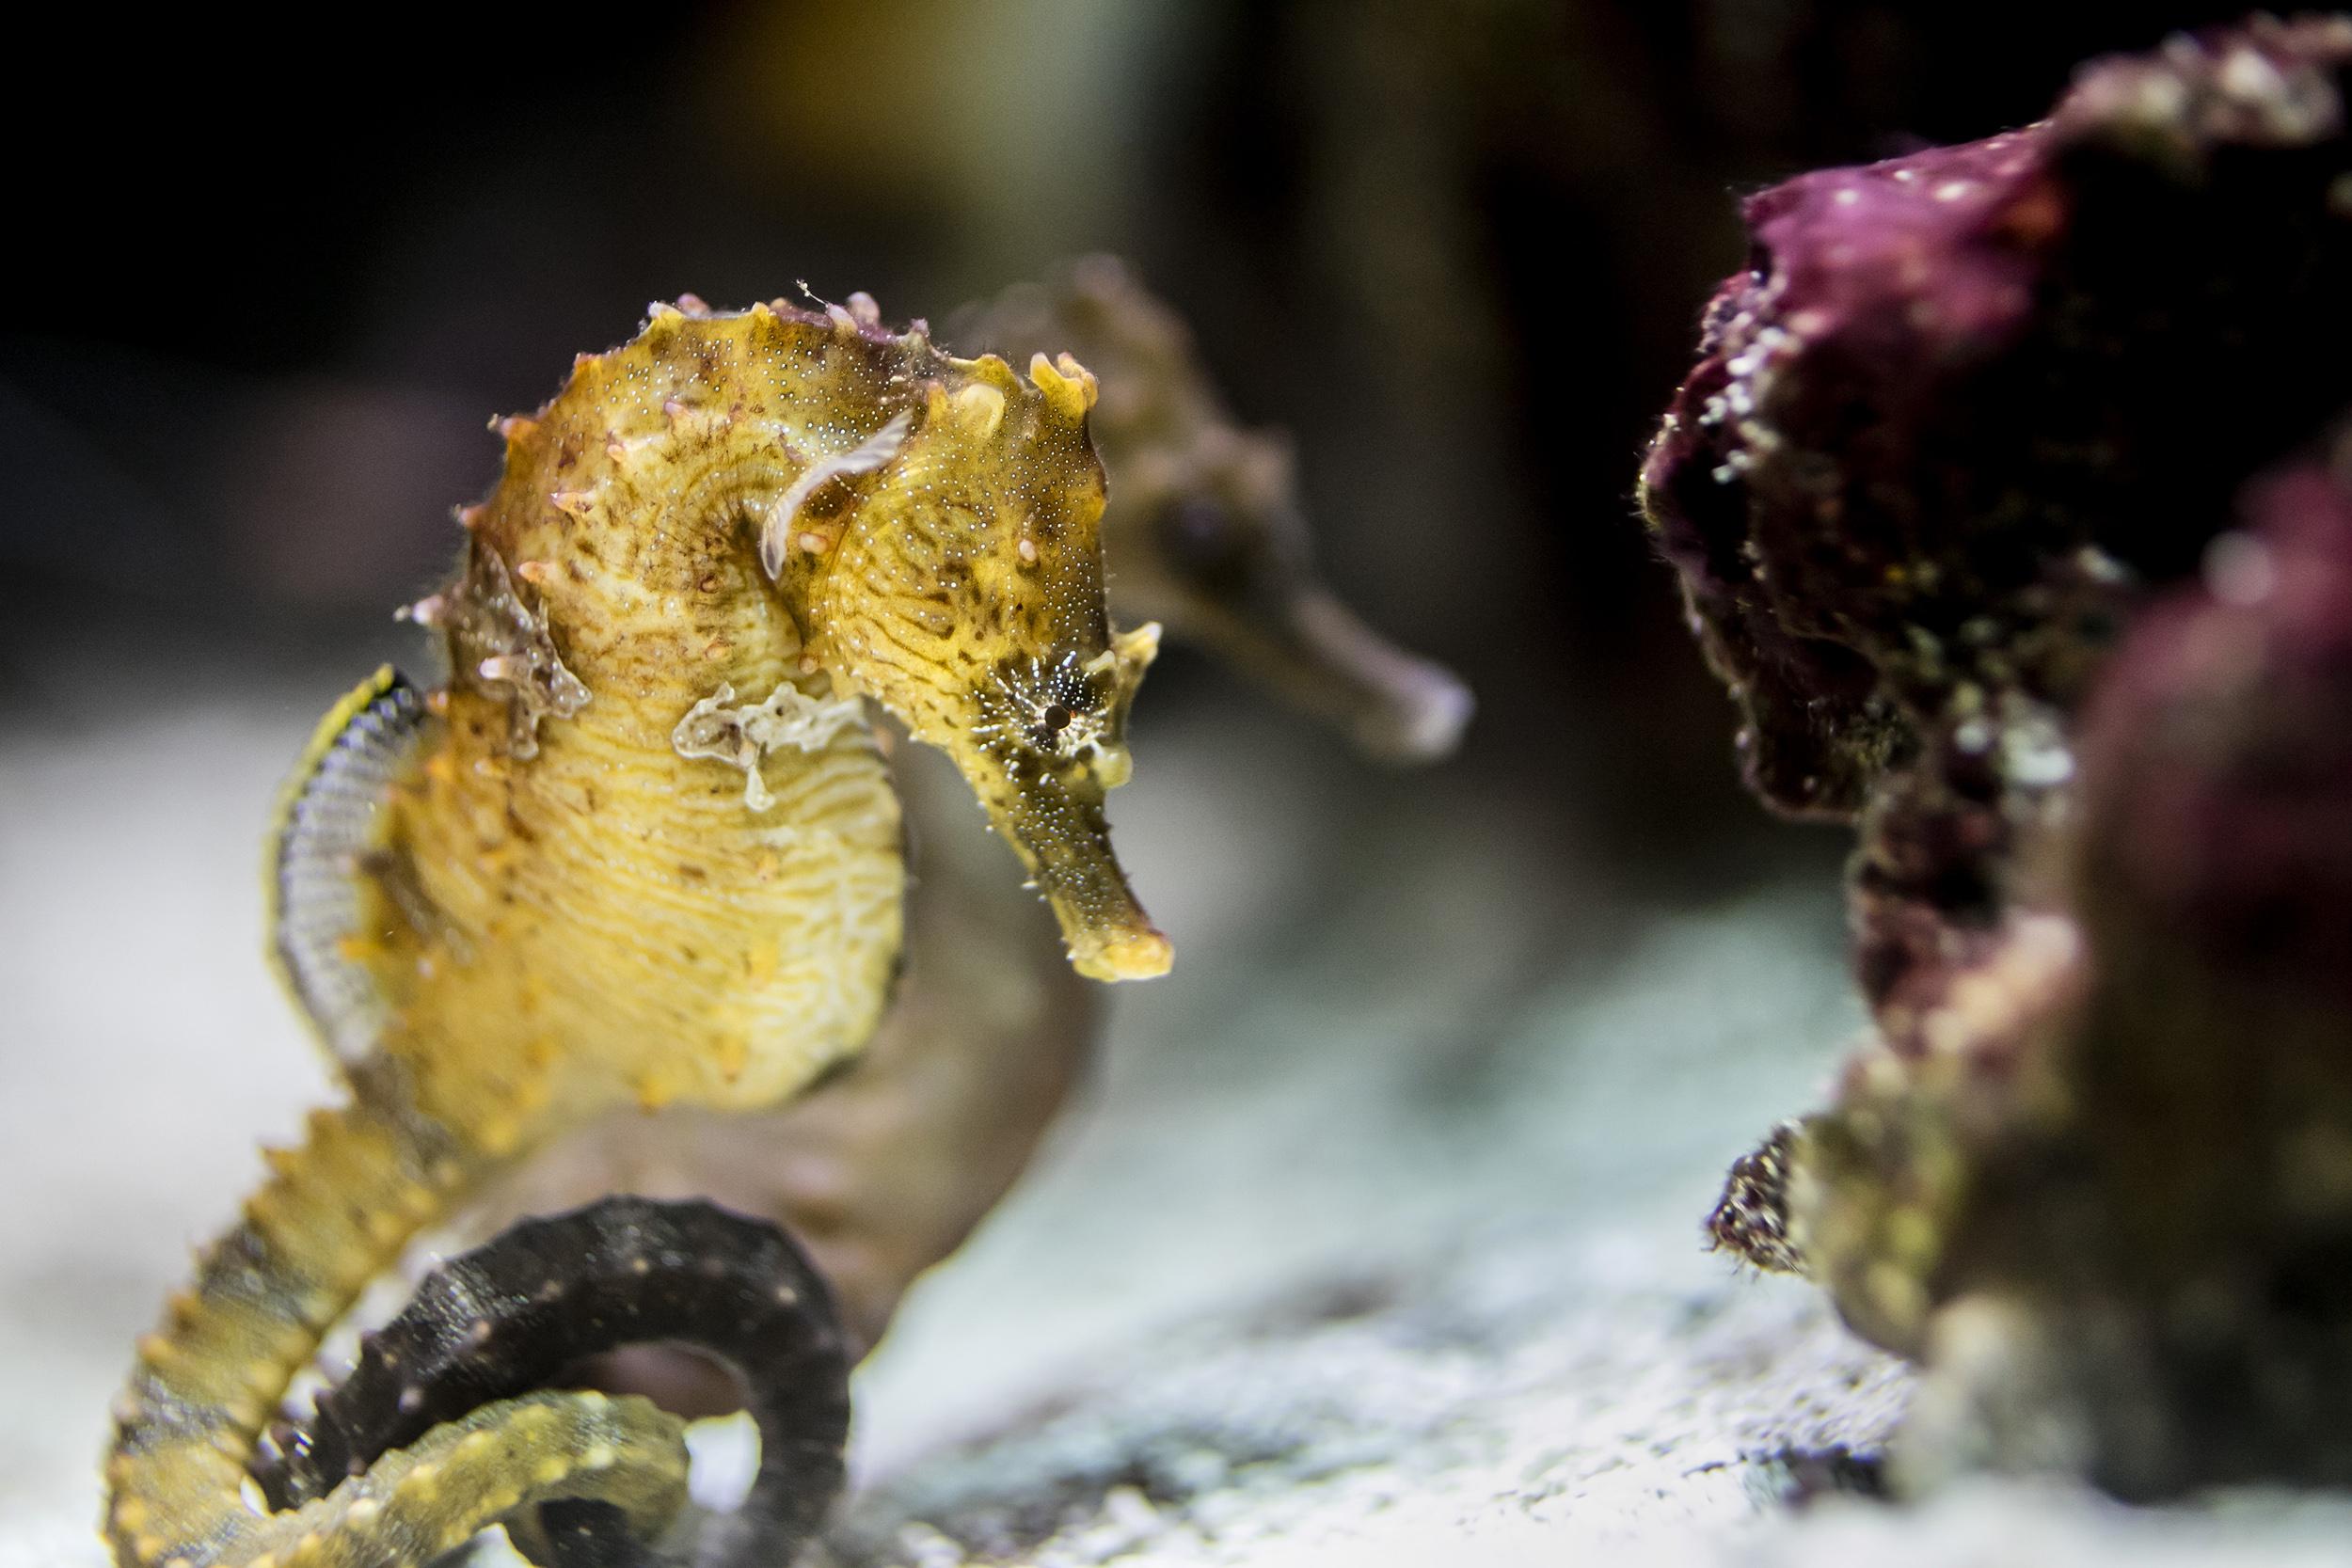 Shedd Aquarium's new "Underwater Beauty" exhibit will feature 100 different species, including seahorses. (© Shedd Aquarium / Brenna Hernandez)